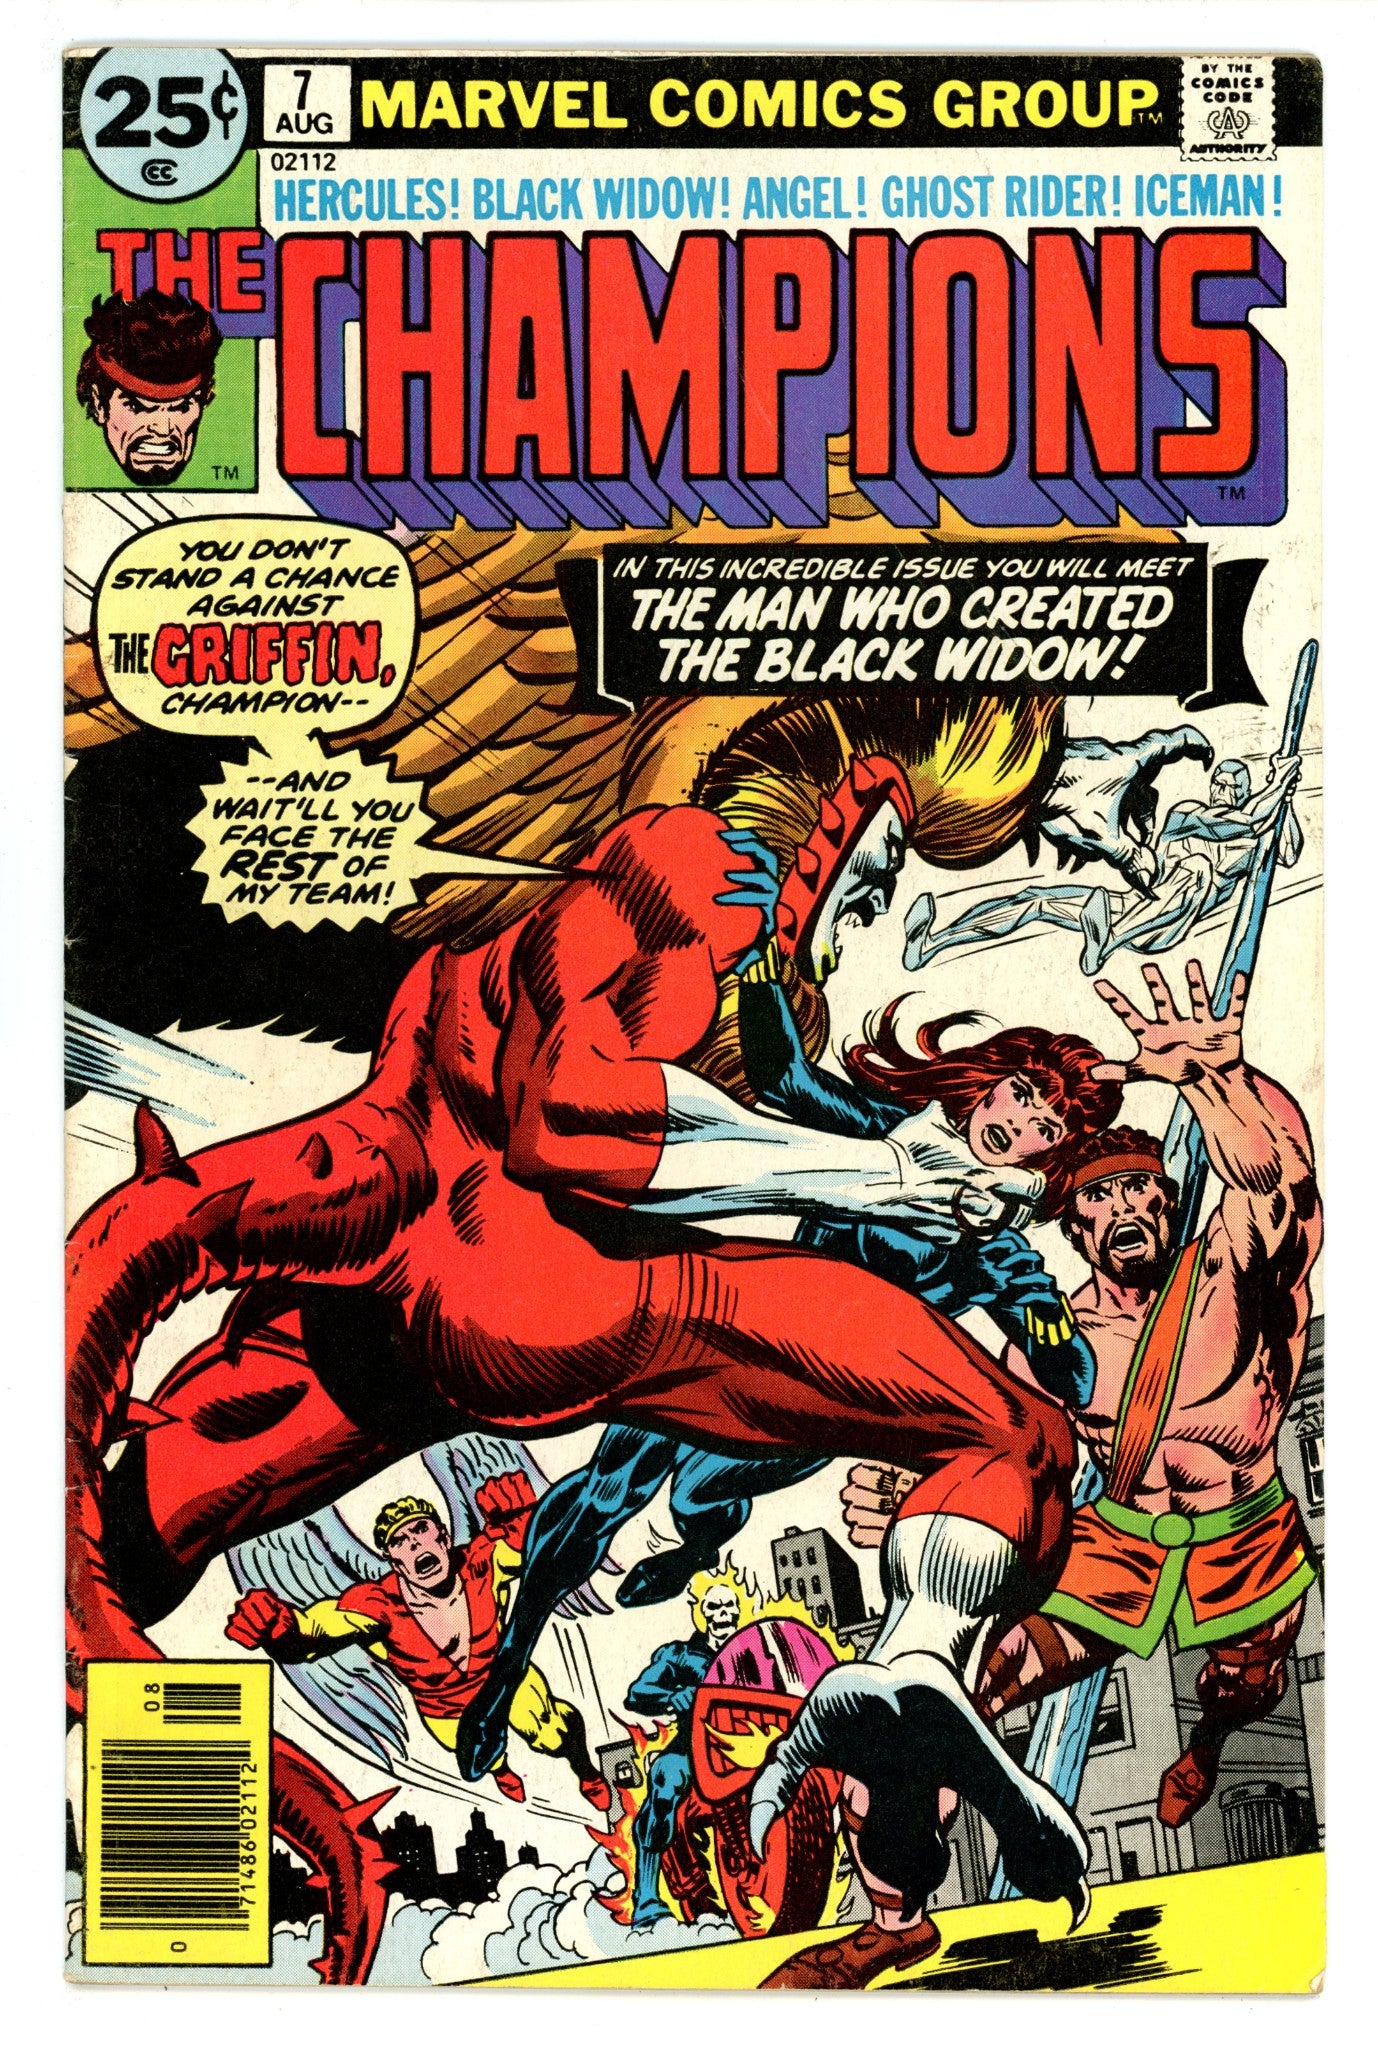 The Champions Vol 1 7 VG+ (4.5) (1976) 